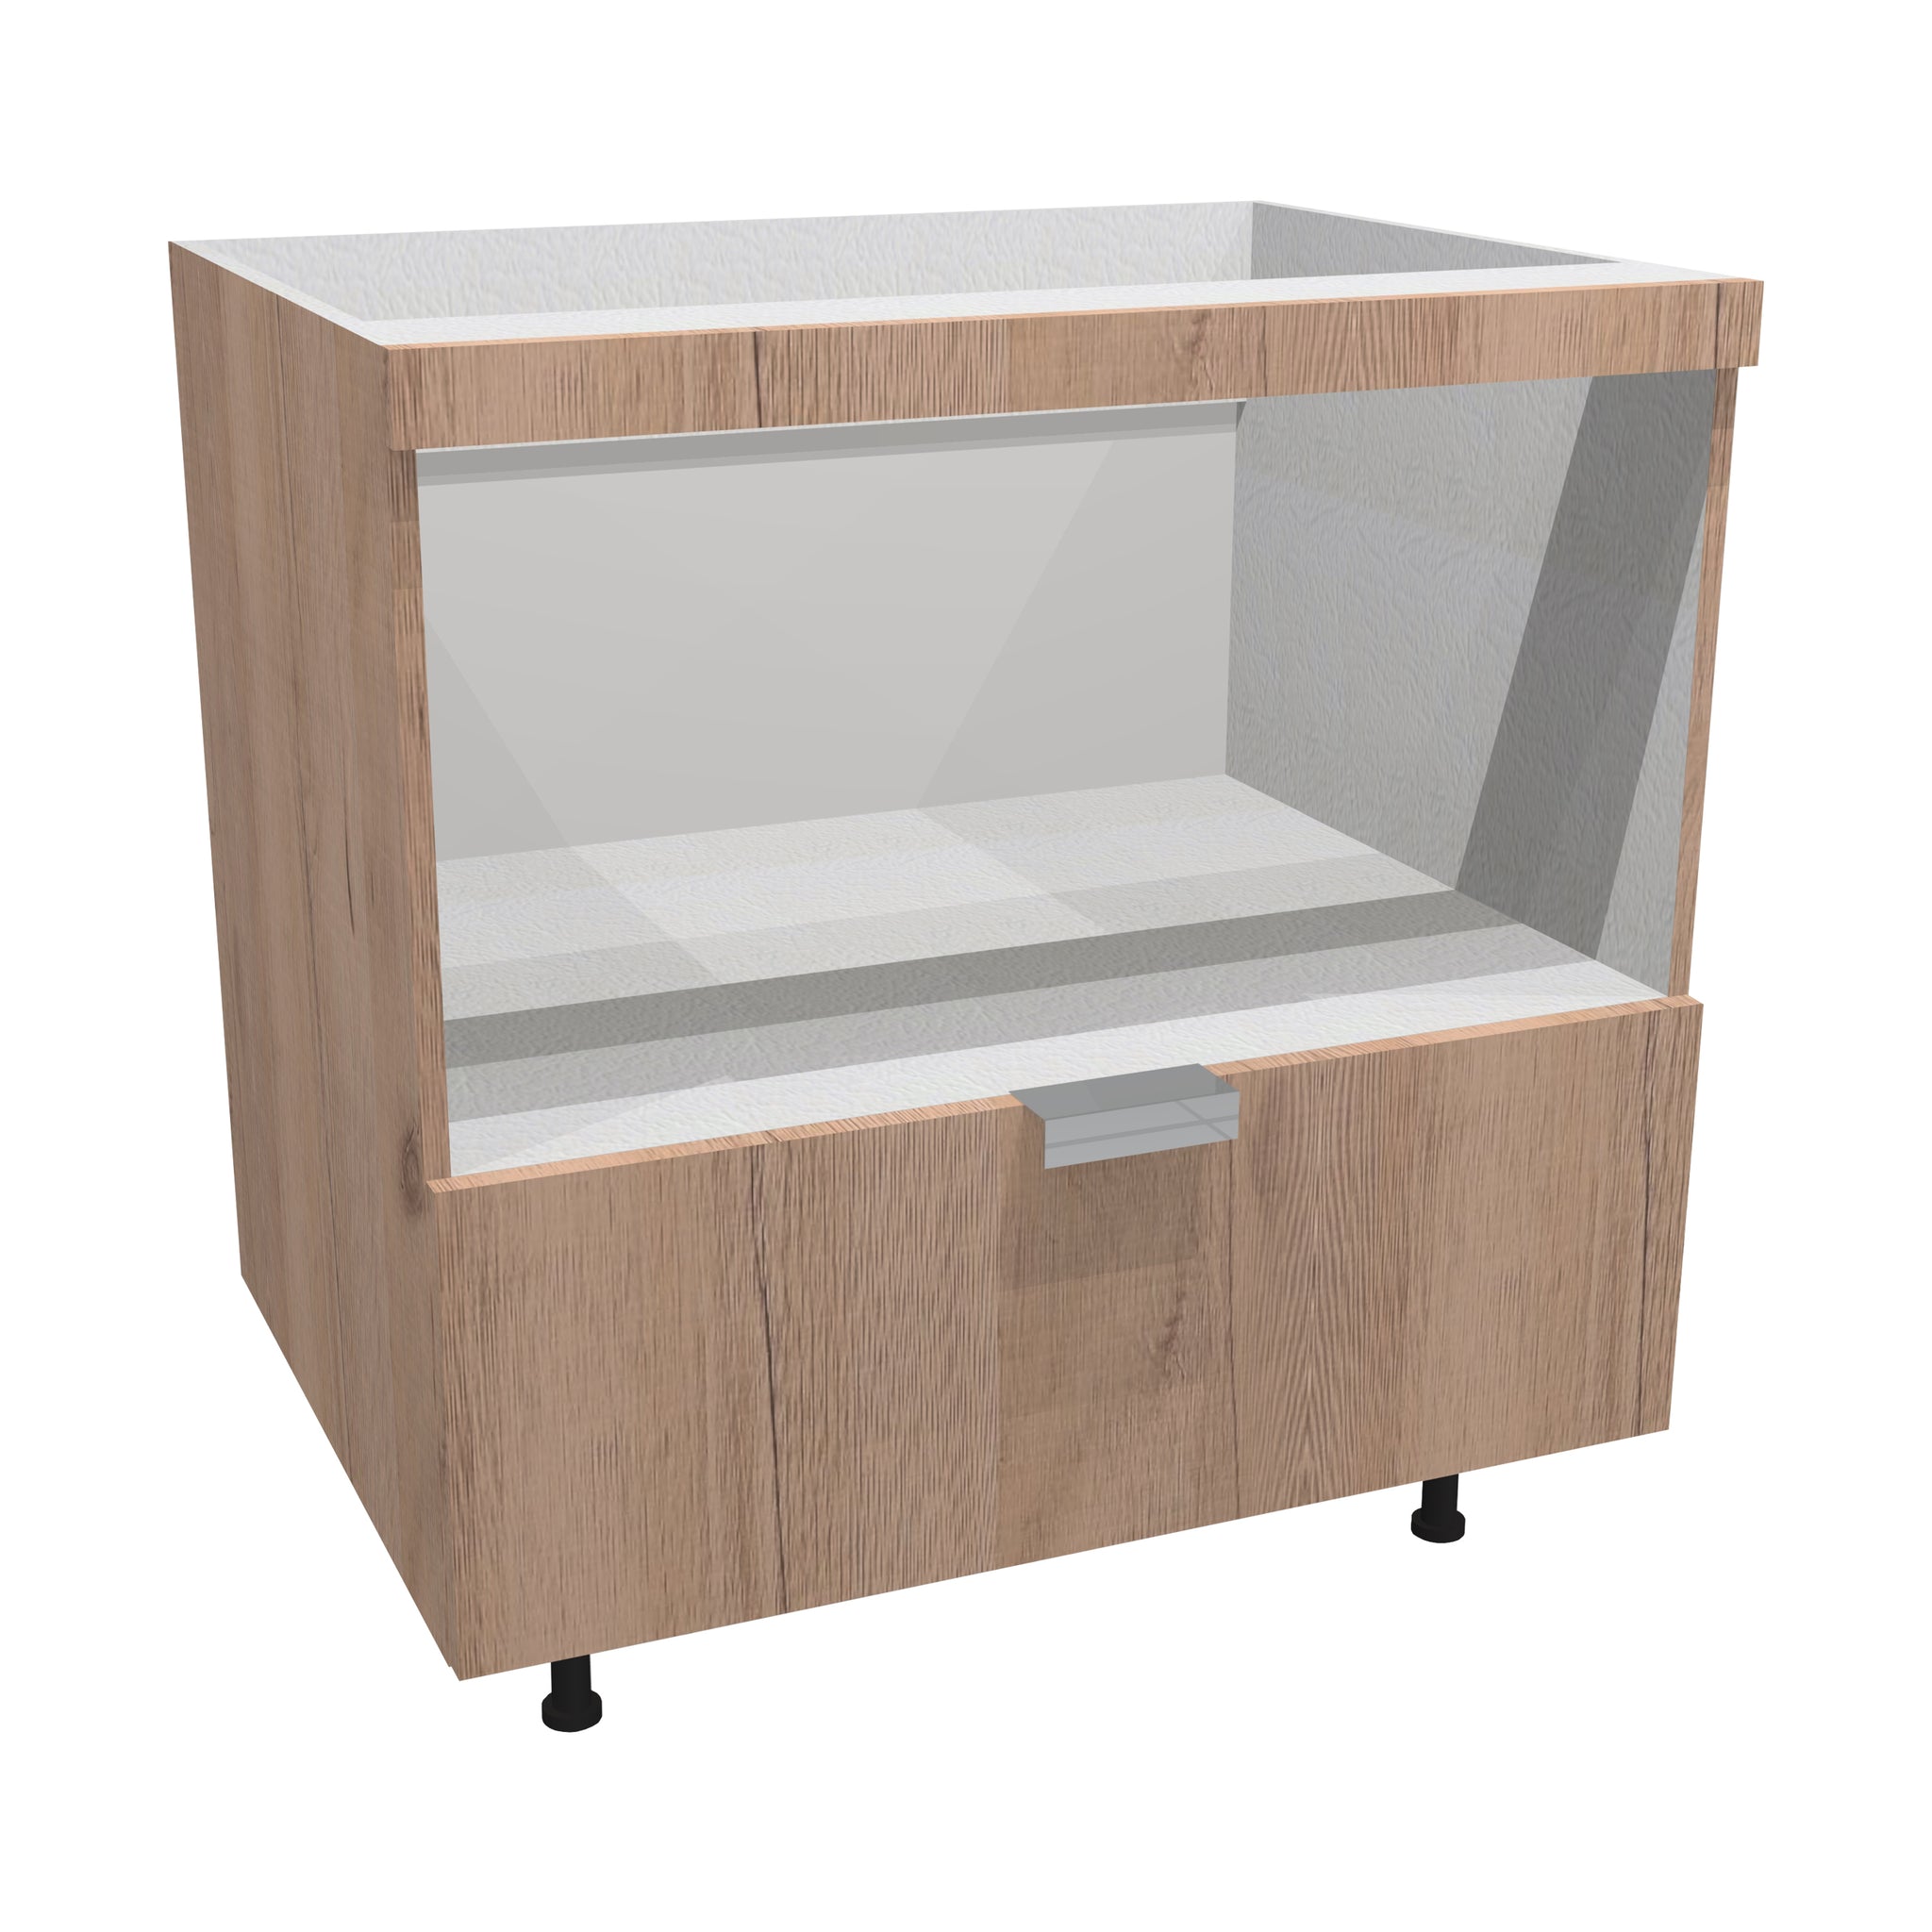 RTA - Rustic Oak - Base Microwave Cabinet | 24"W x 34.5"H x 24"D